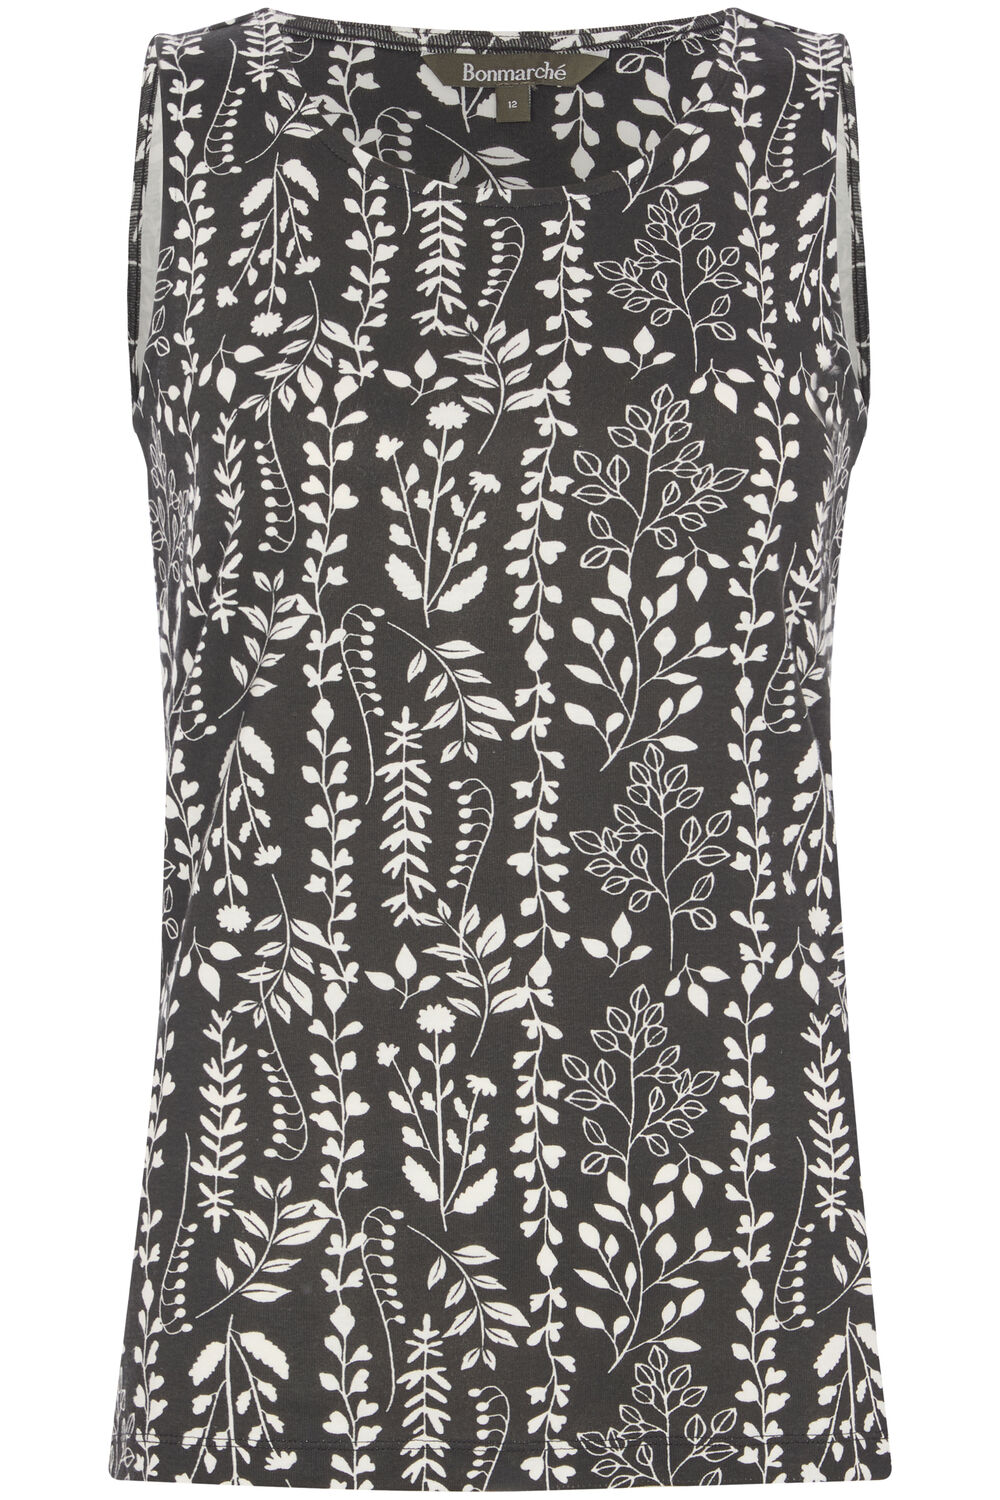 Bonmarche Black Sleeveless Floral Stem Print Scoop Neck Vest, Size: 12